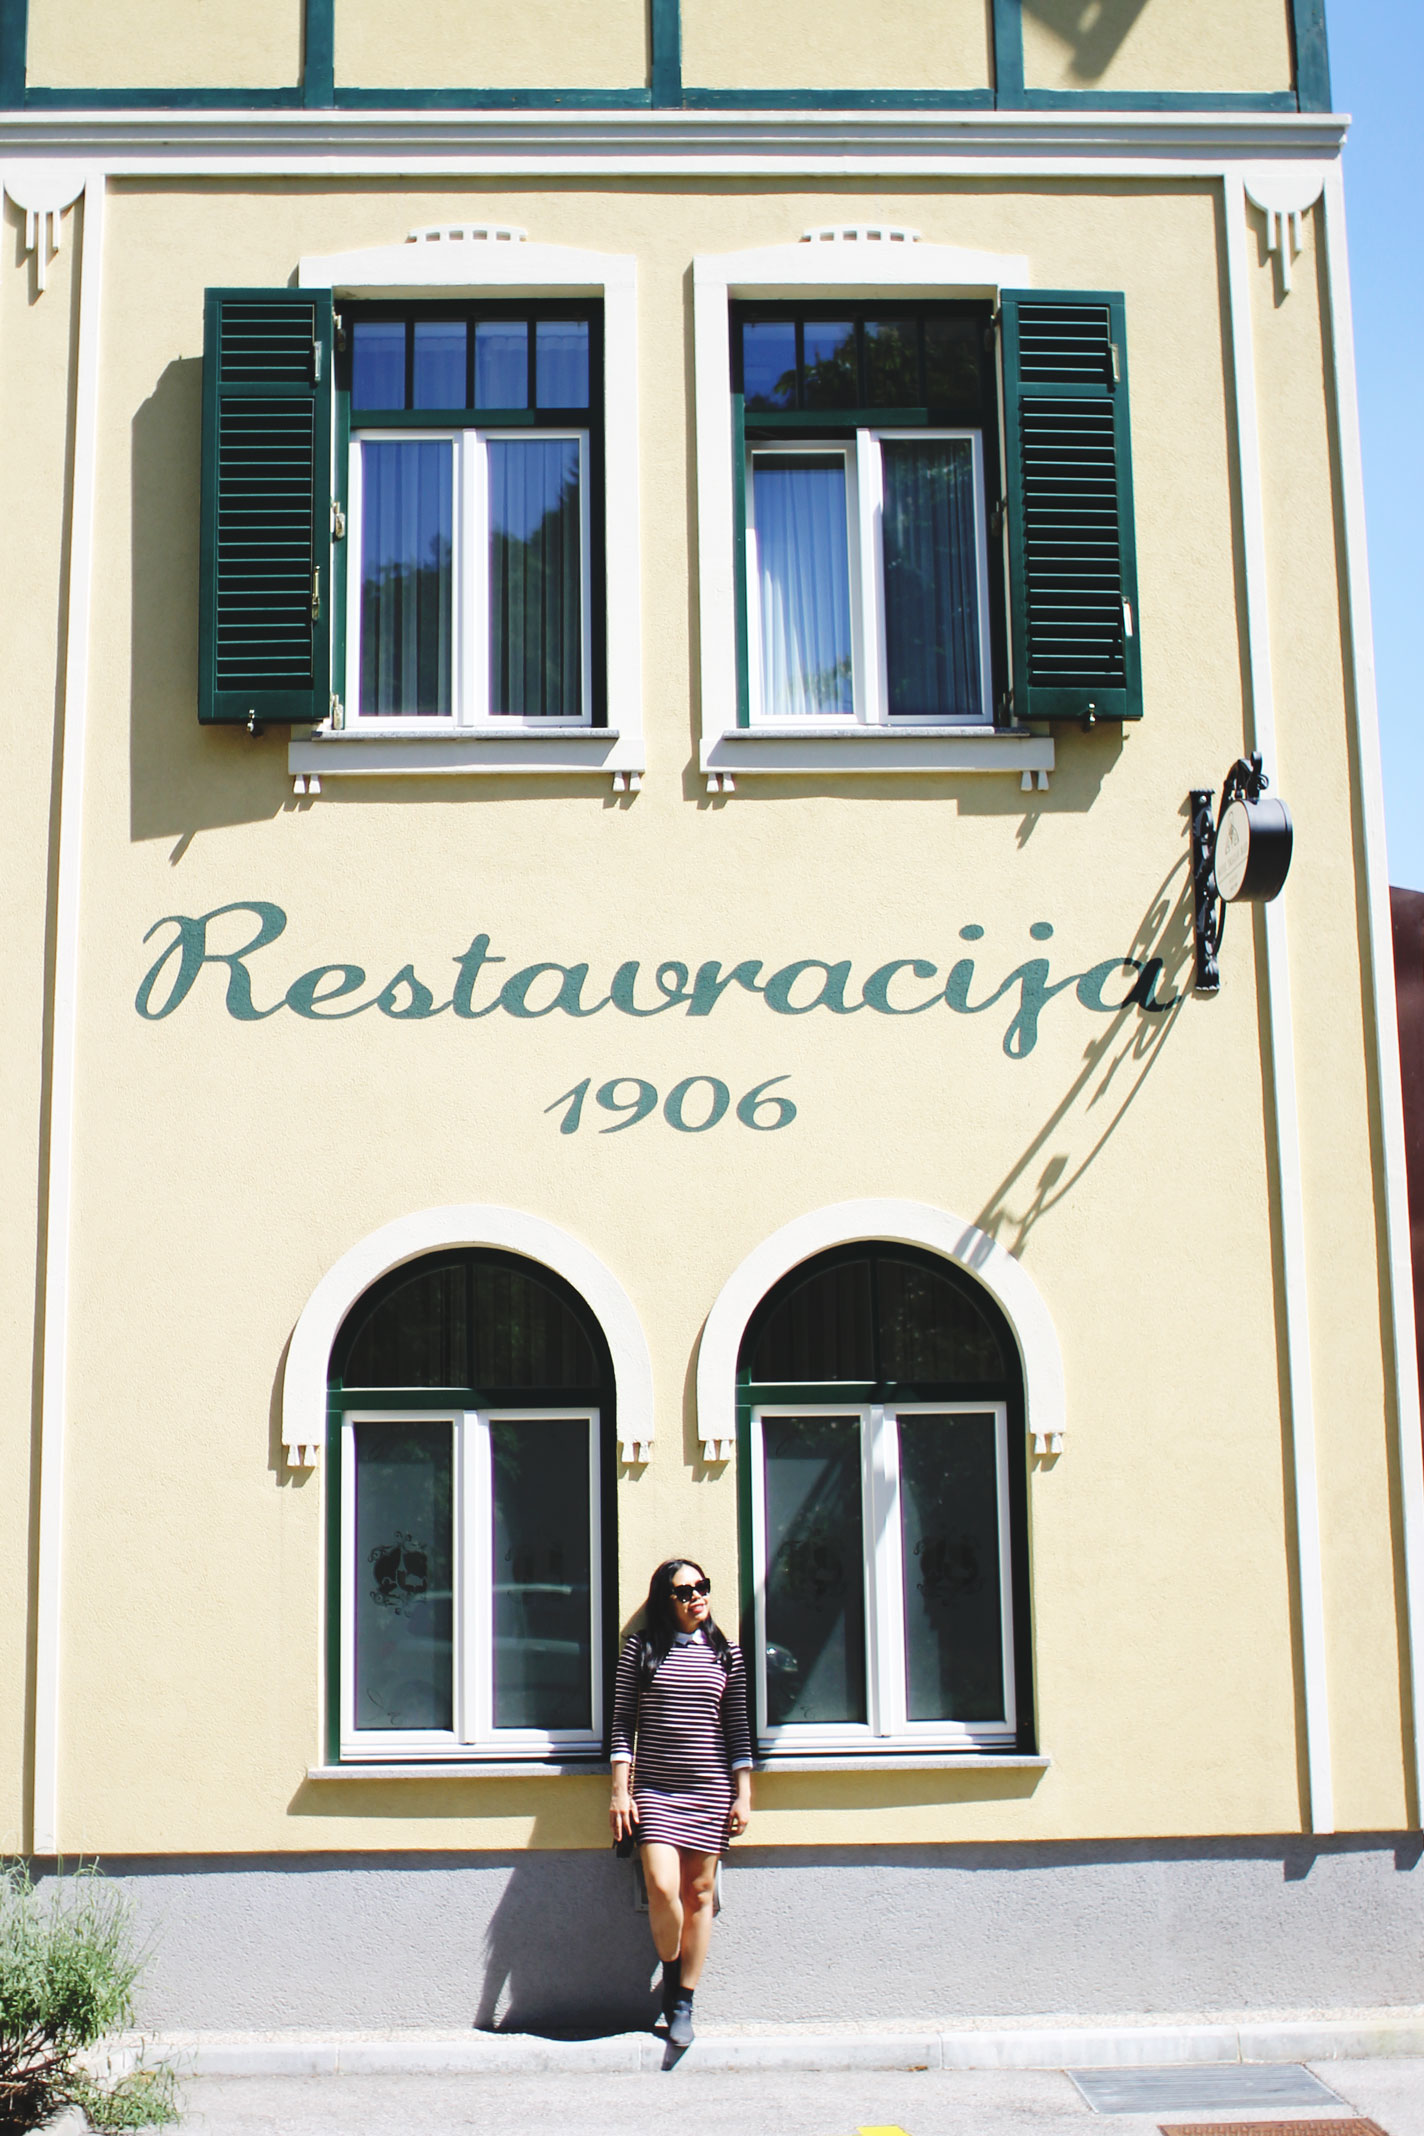 Hotel Triglav - Restaurant 1906 - Review of Restavracija 1906, Bled, Slovenia - Styleat30 Travel Blog 01